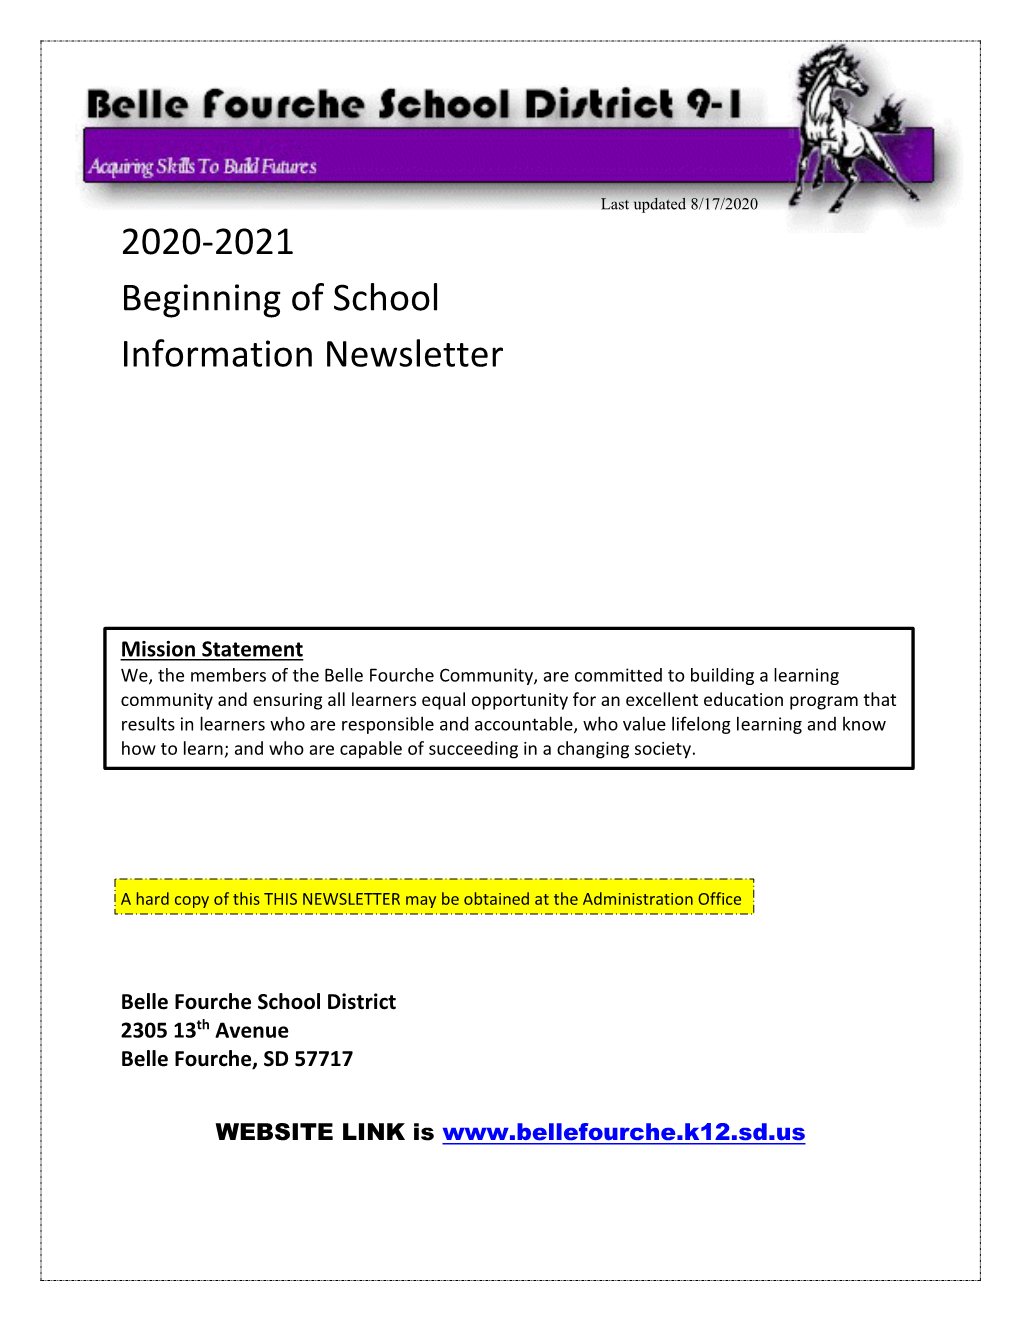 2020-2021 Beginning of School Information Newsletter